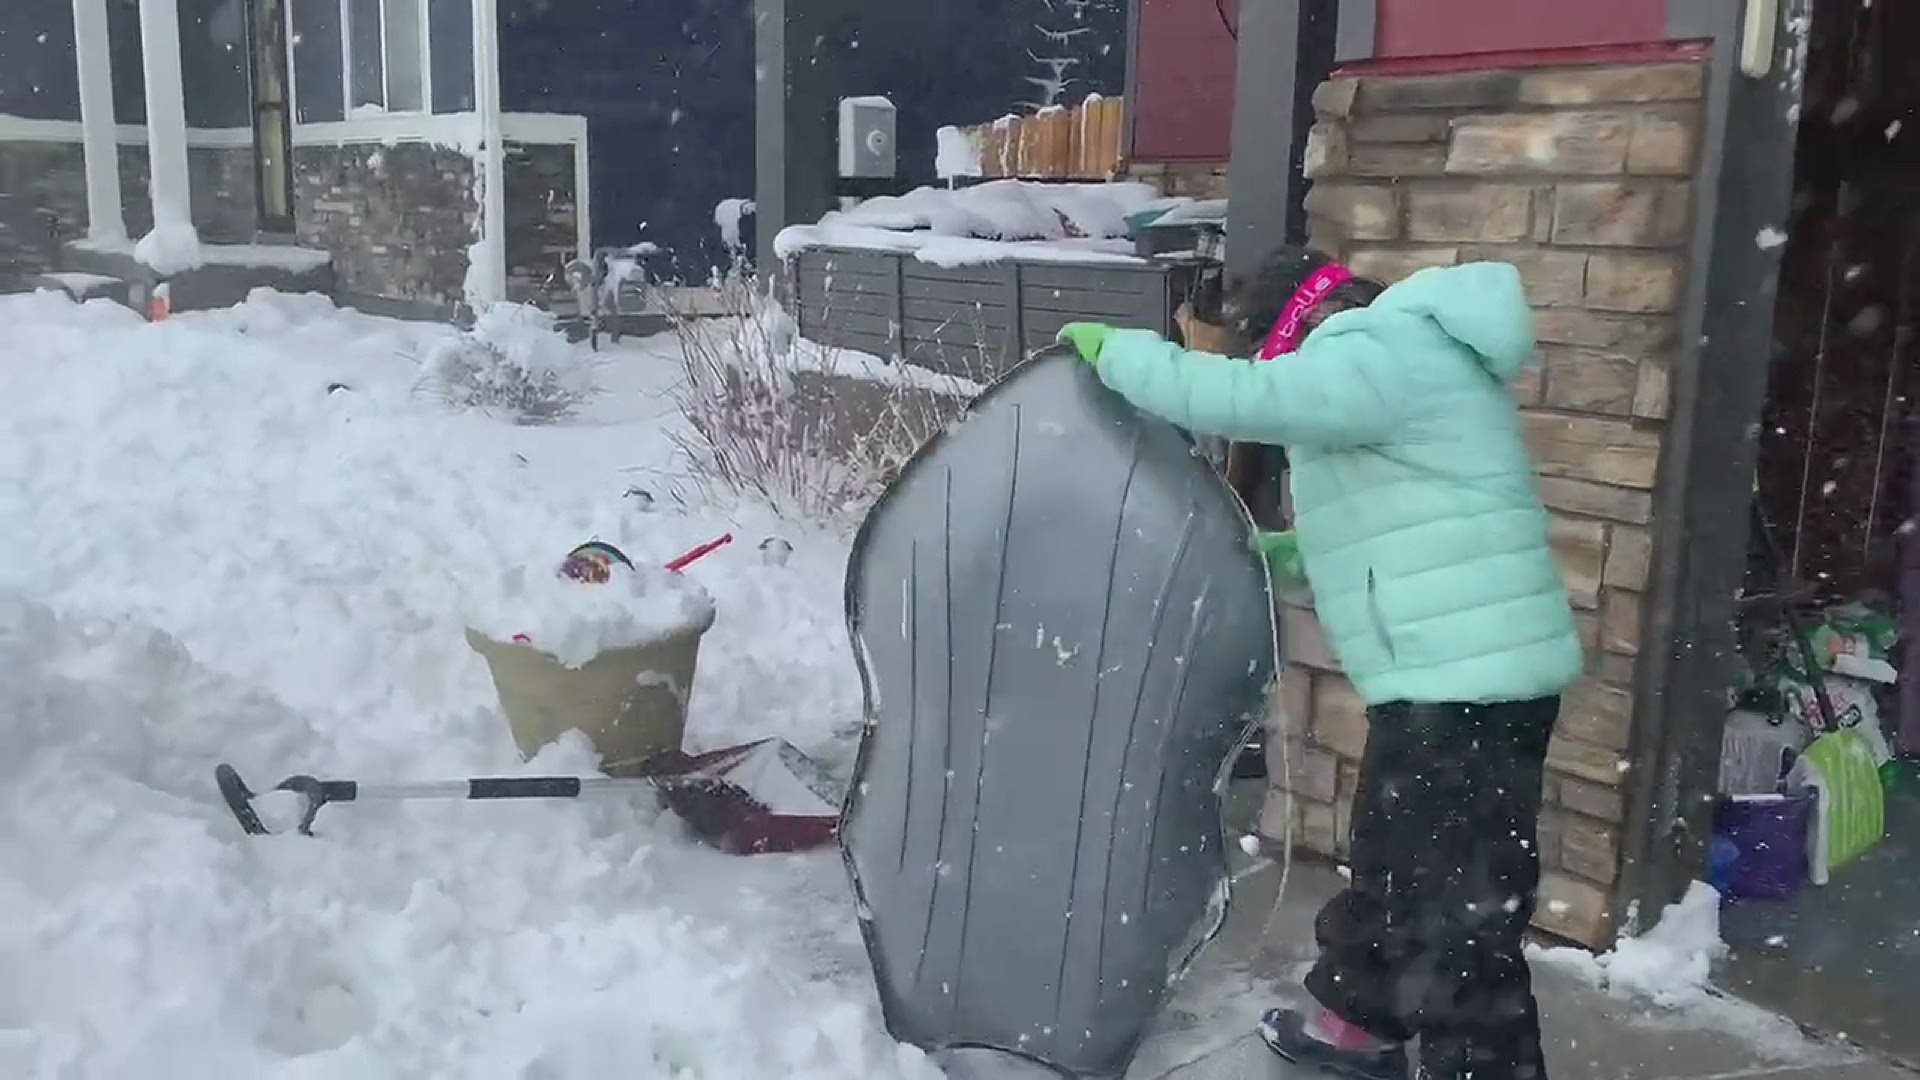 Colorado girl creates snow coaster in Milliken
Credit: Katie pike